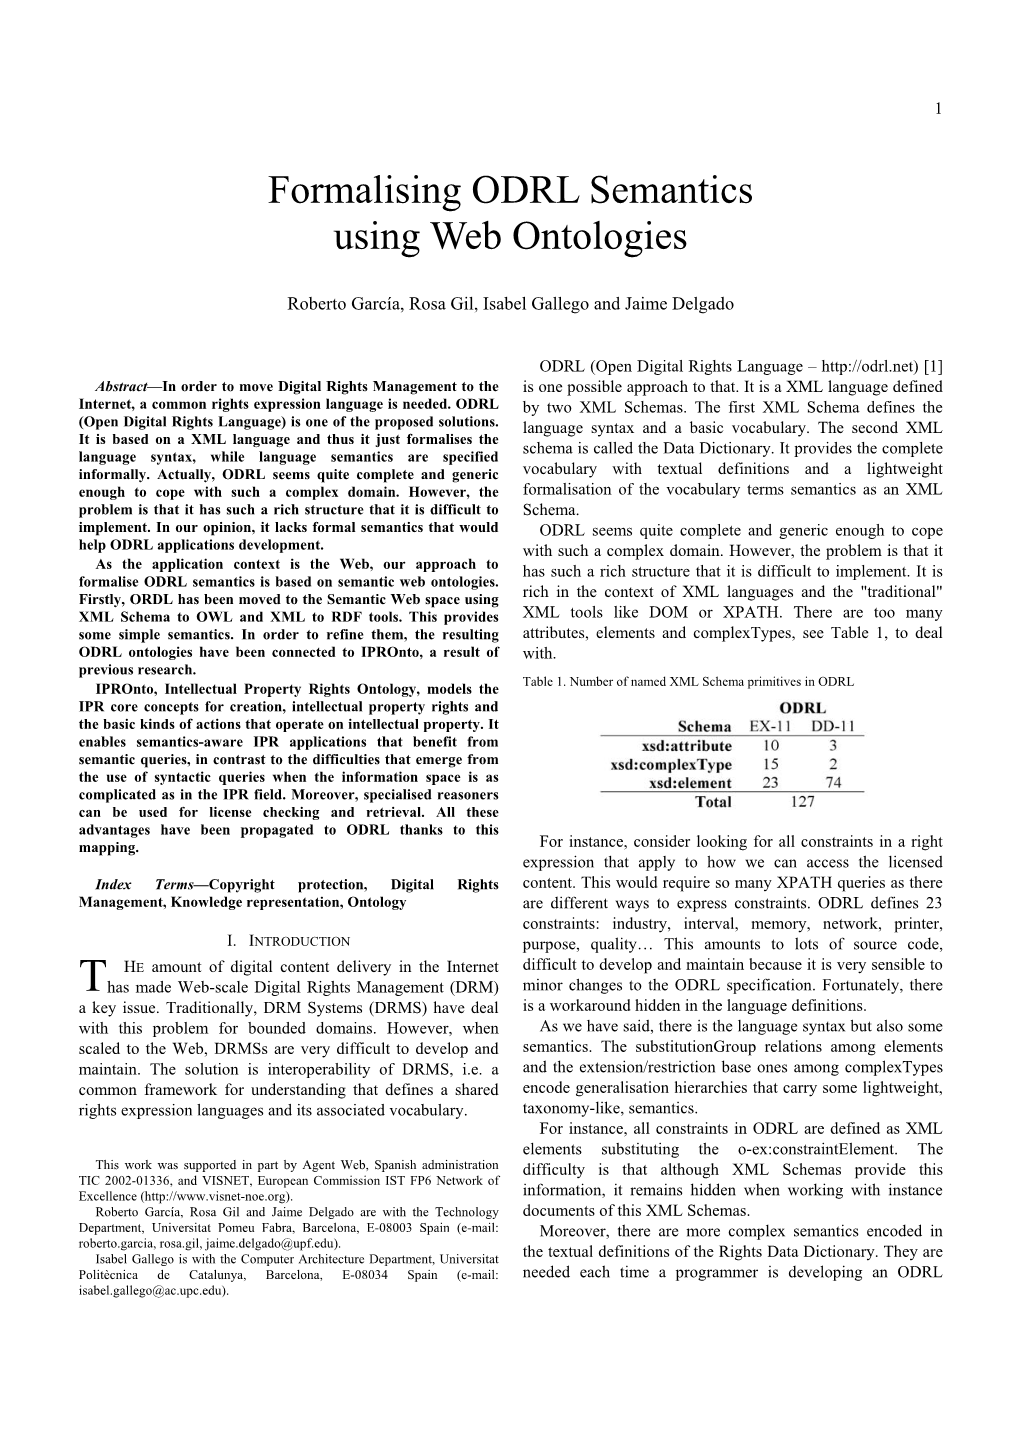 Formalising ODRL Semantics Using Web Ontologies